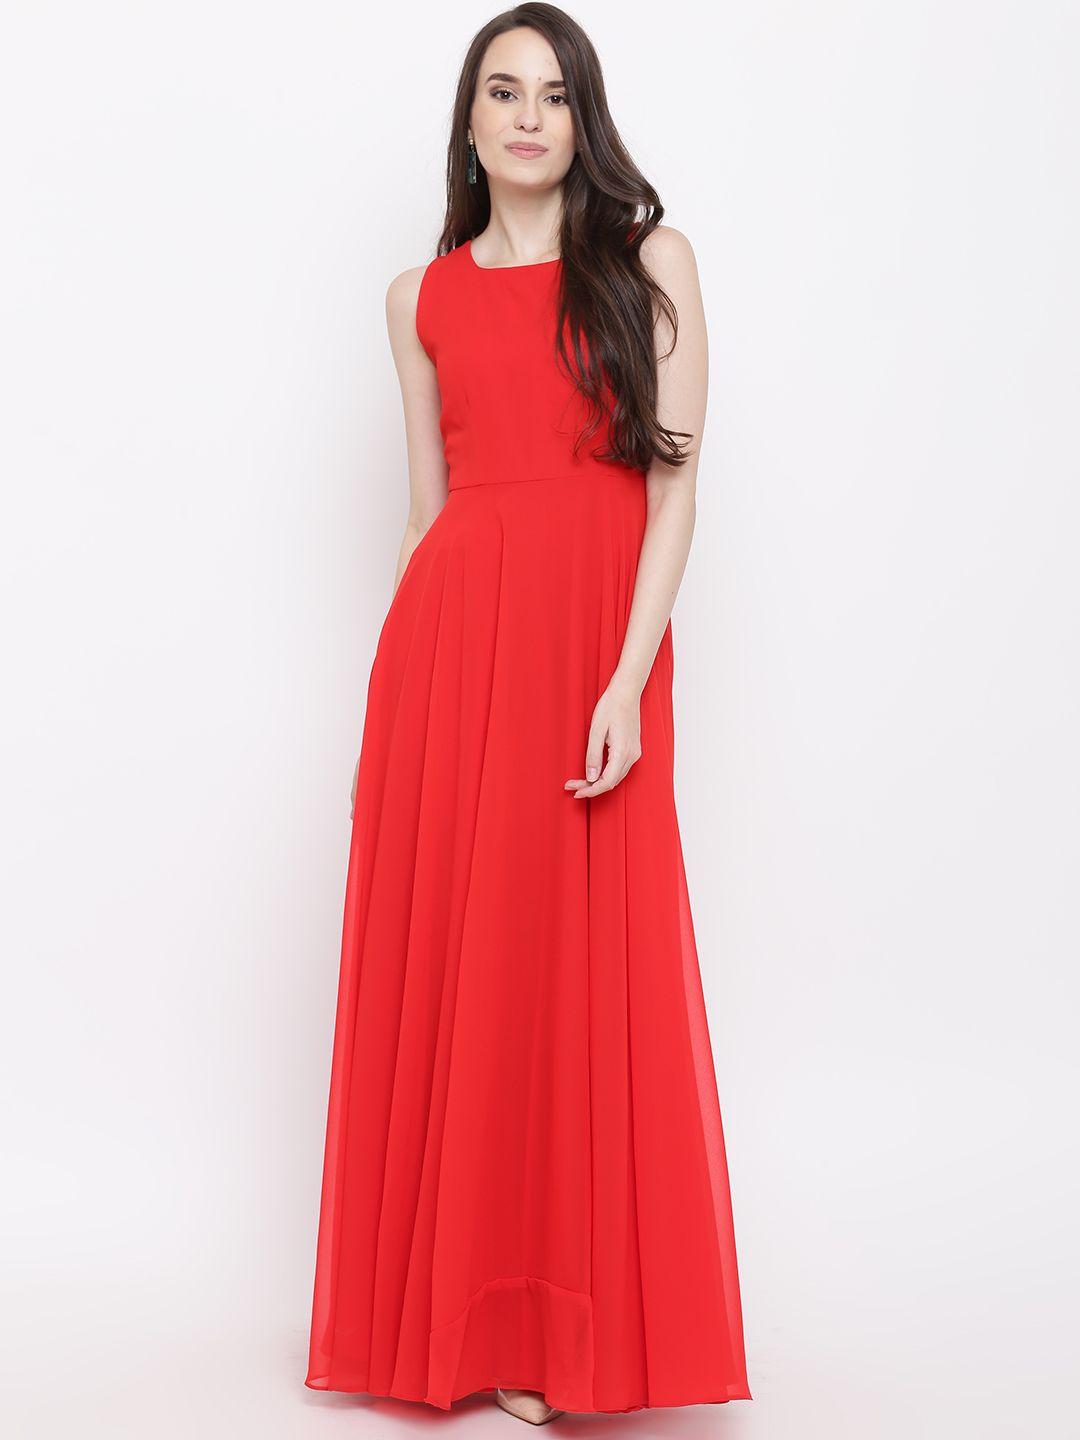 mabish by sonal jain red sleeveless maxi dress